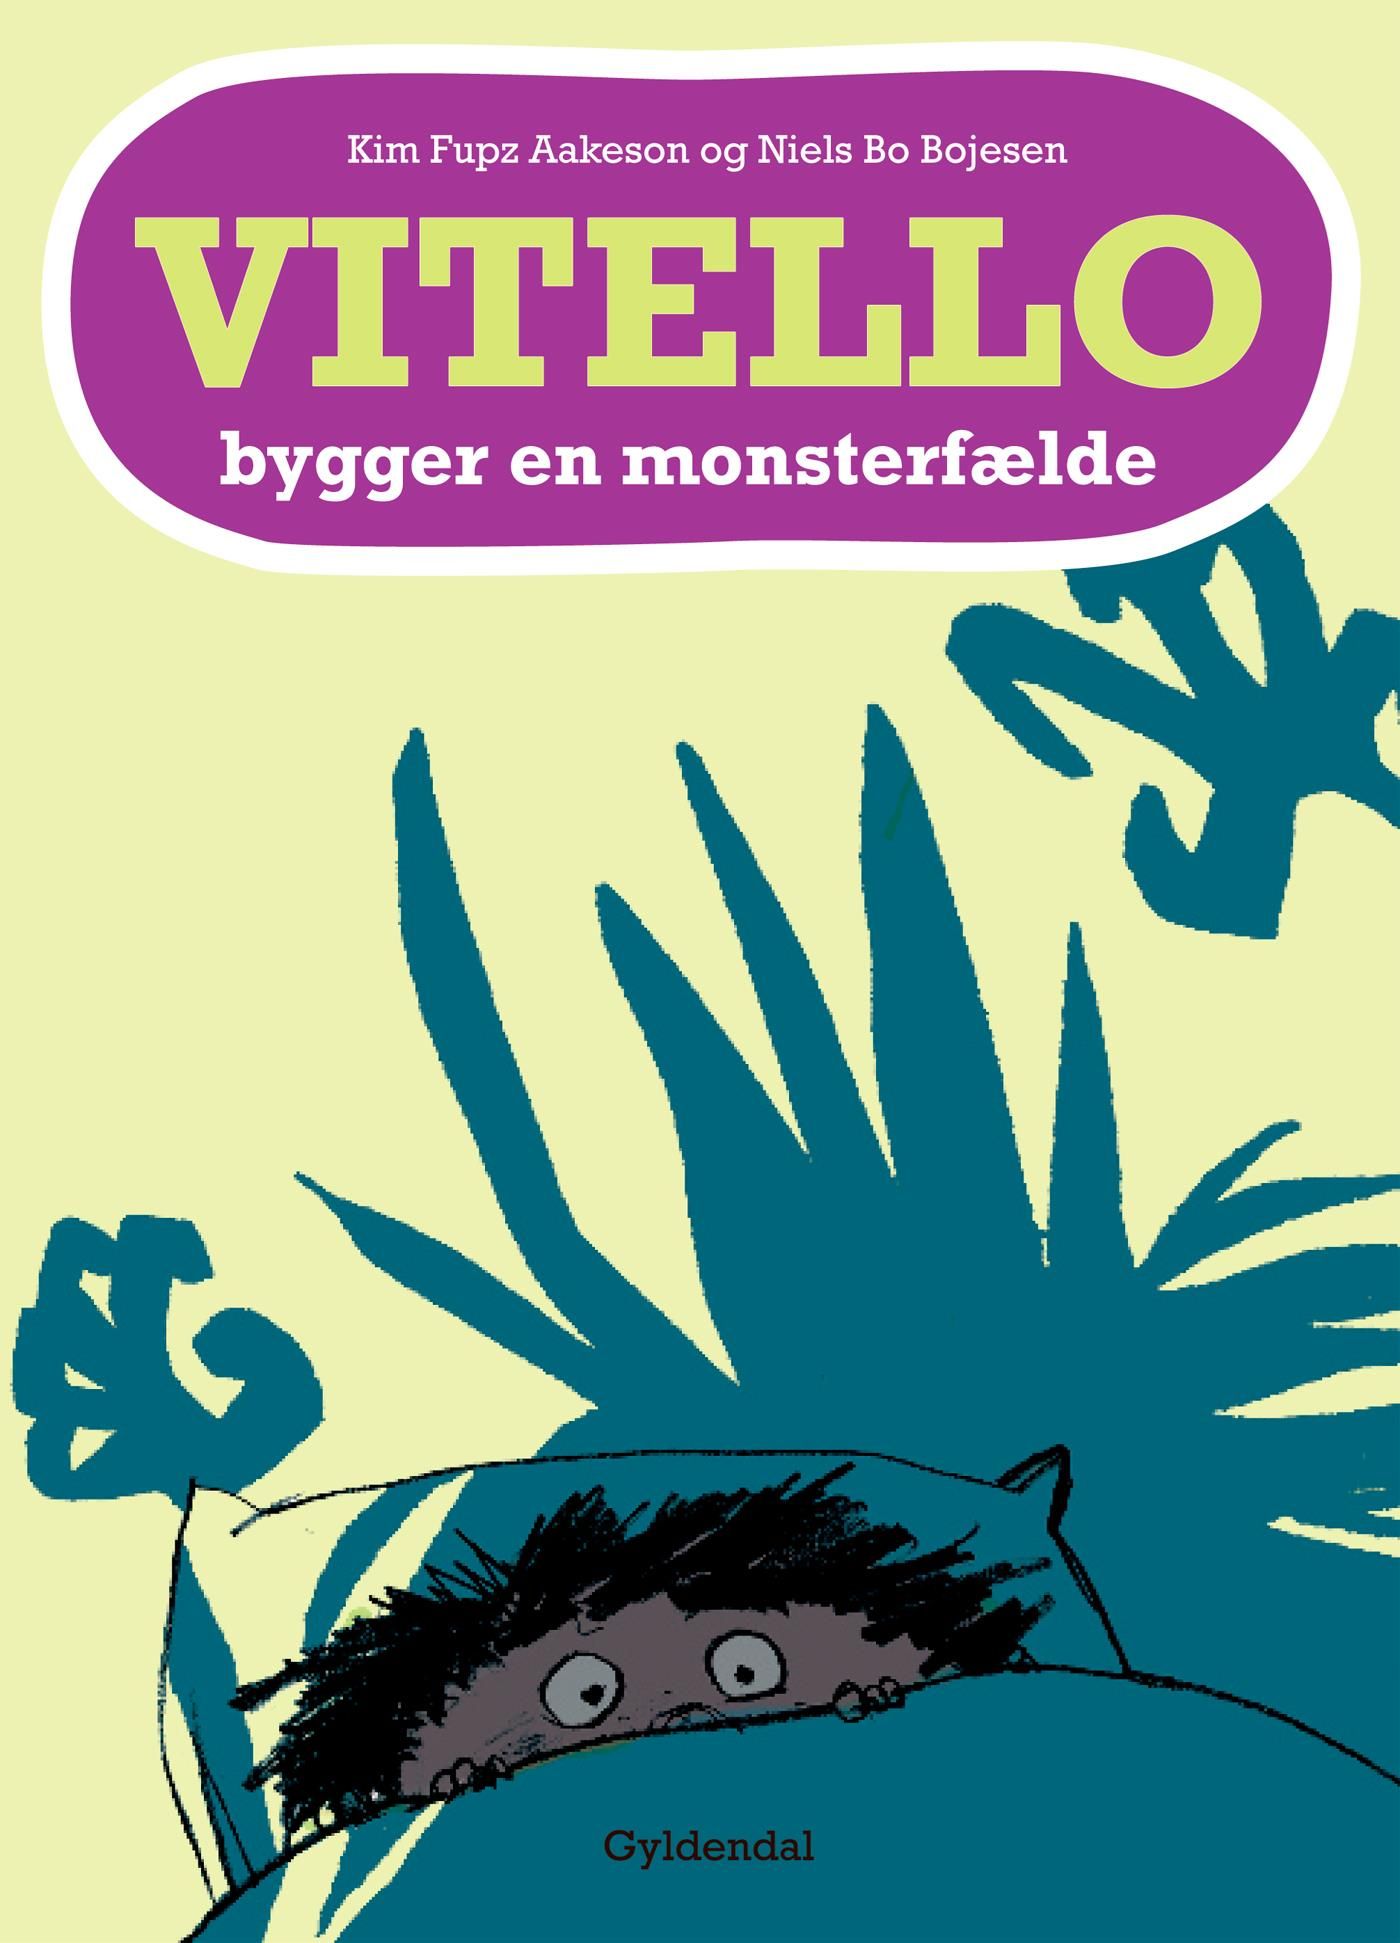 Vitello bygger en monsterfælde - Lyt&læs, eBook by Niels Bo Bojesen, Kim Fupz Aakeson